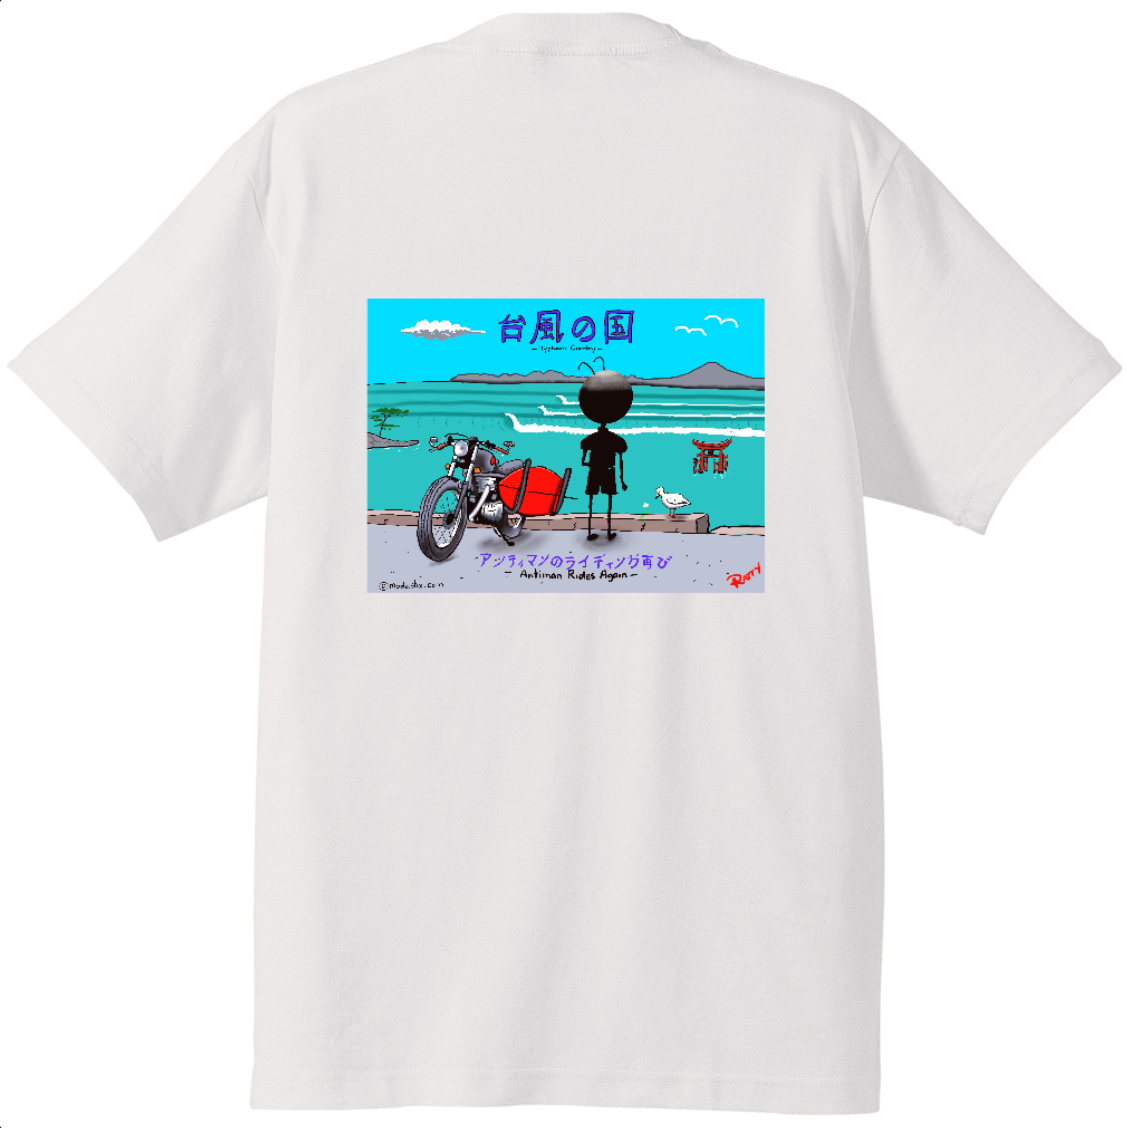 Anti-Rides-Again-T-shirt-ratty-modelstix.png